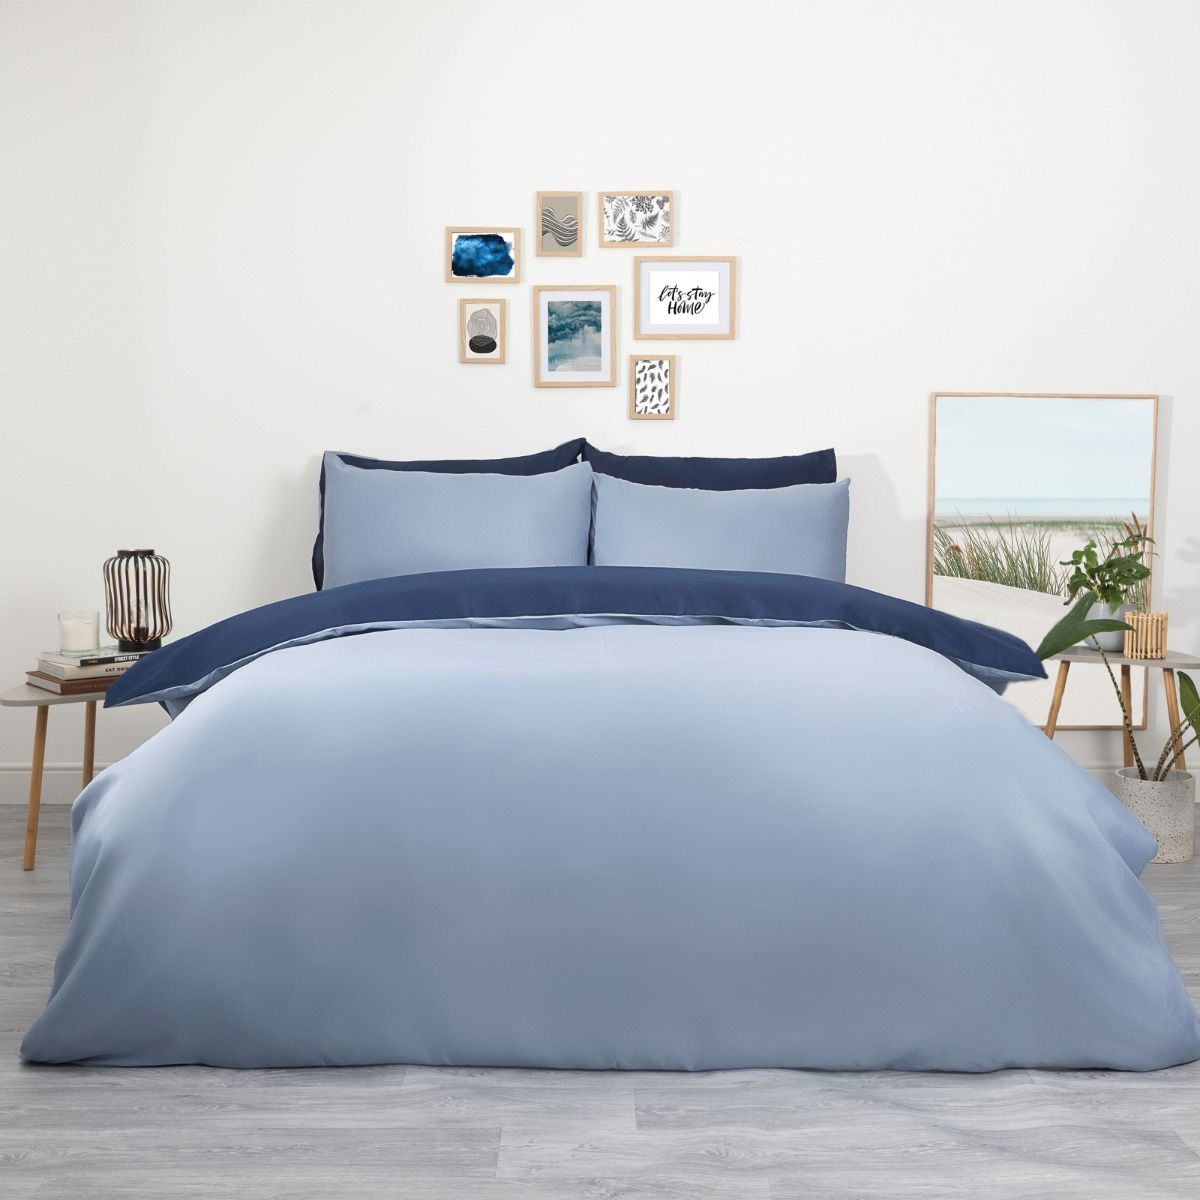 Brentfords Plain Dyed Duvet Cover Quilt Bedding Set With Pillowcase Navy Blue Single